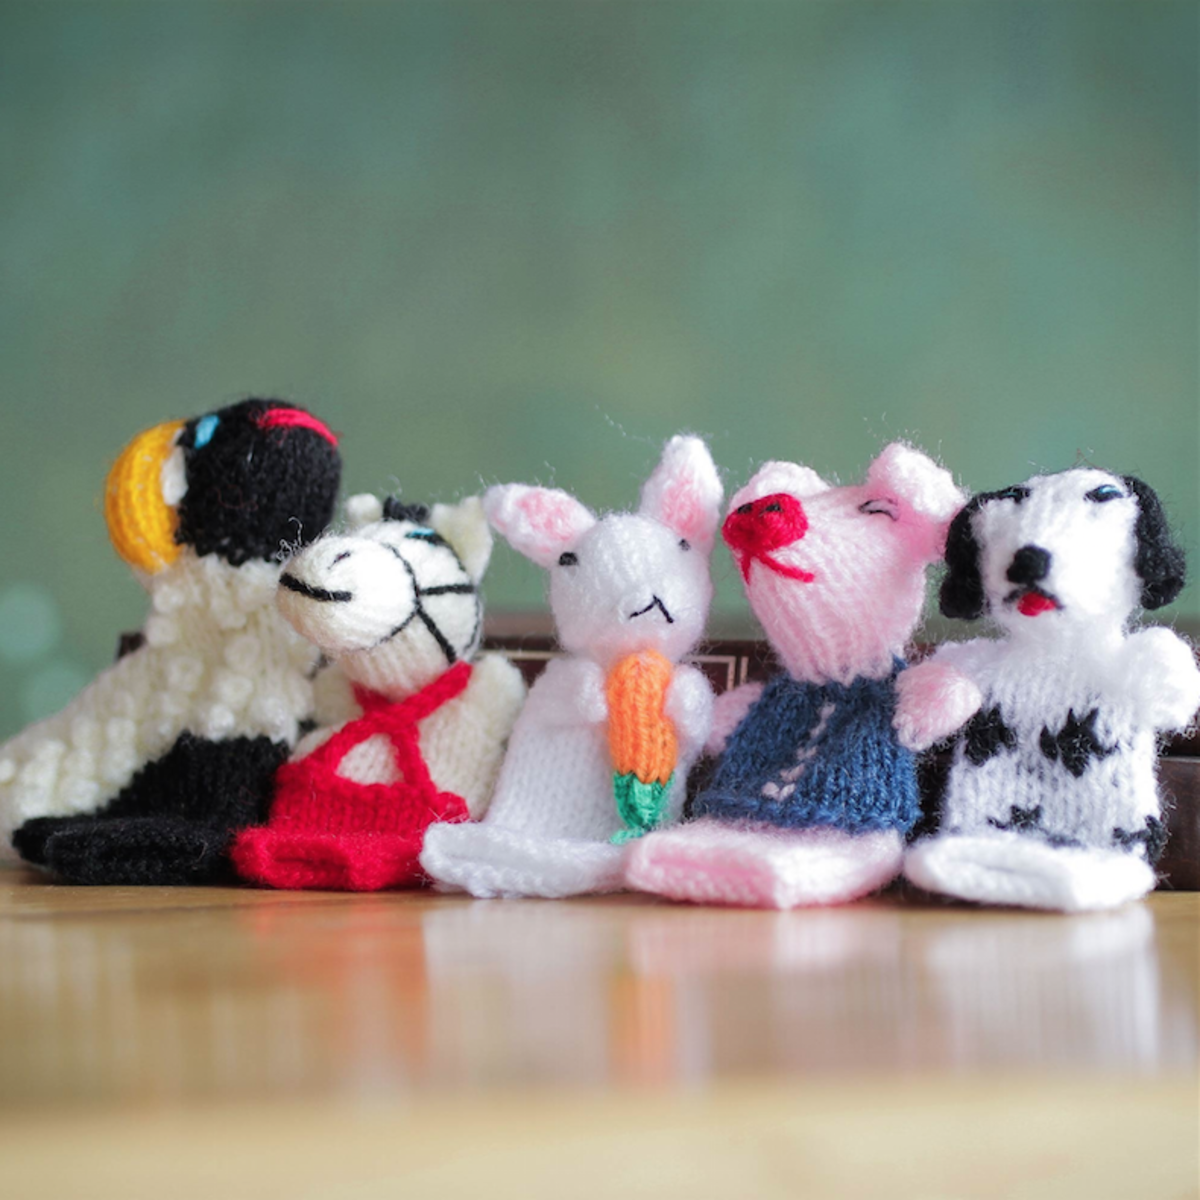 Farm Animal Finger Puppets Handmade in Peru